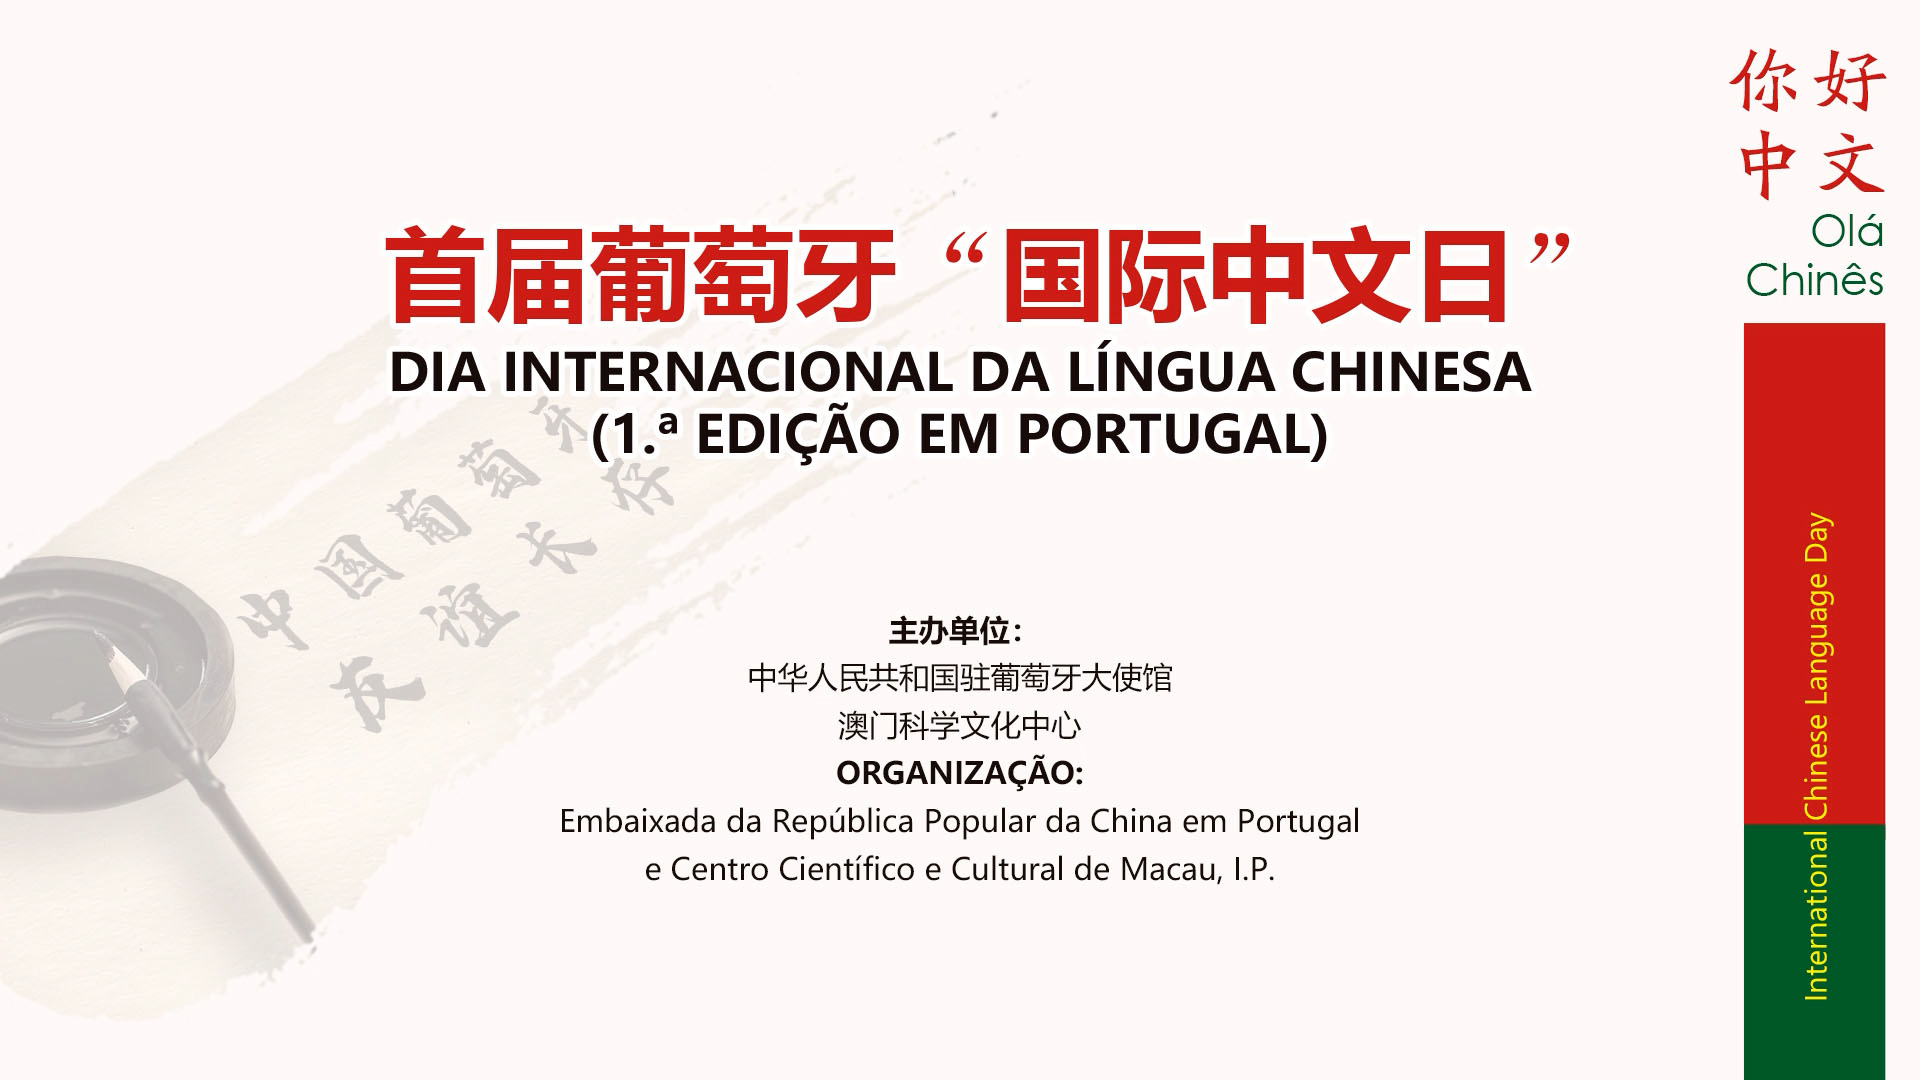  Dia Internacional da Língua Chinesa